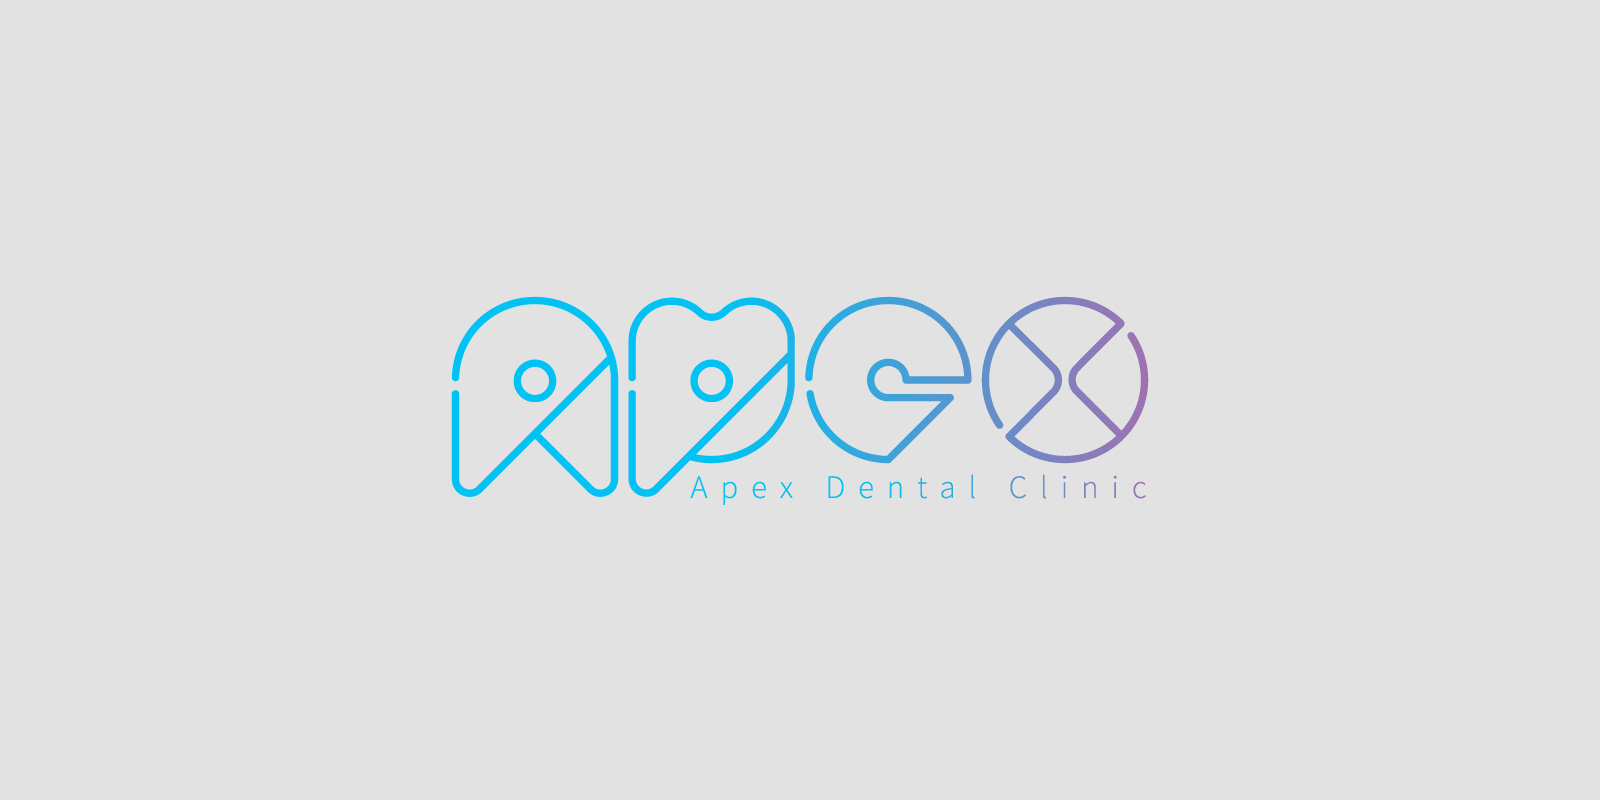 APEX-Dental-Clinic-Logo-Design